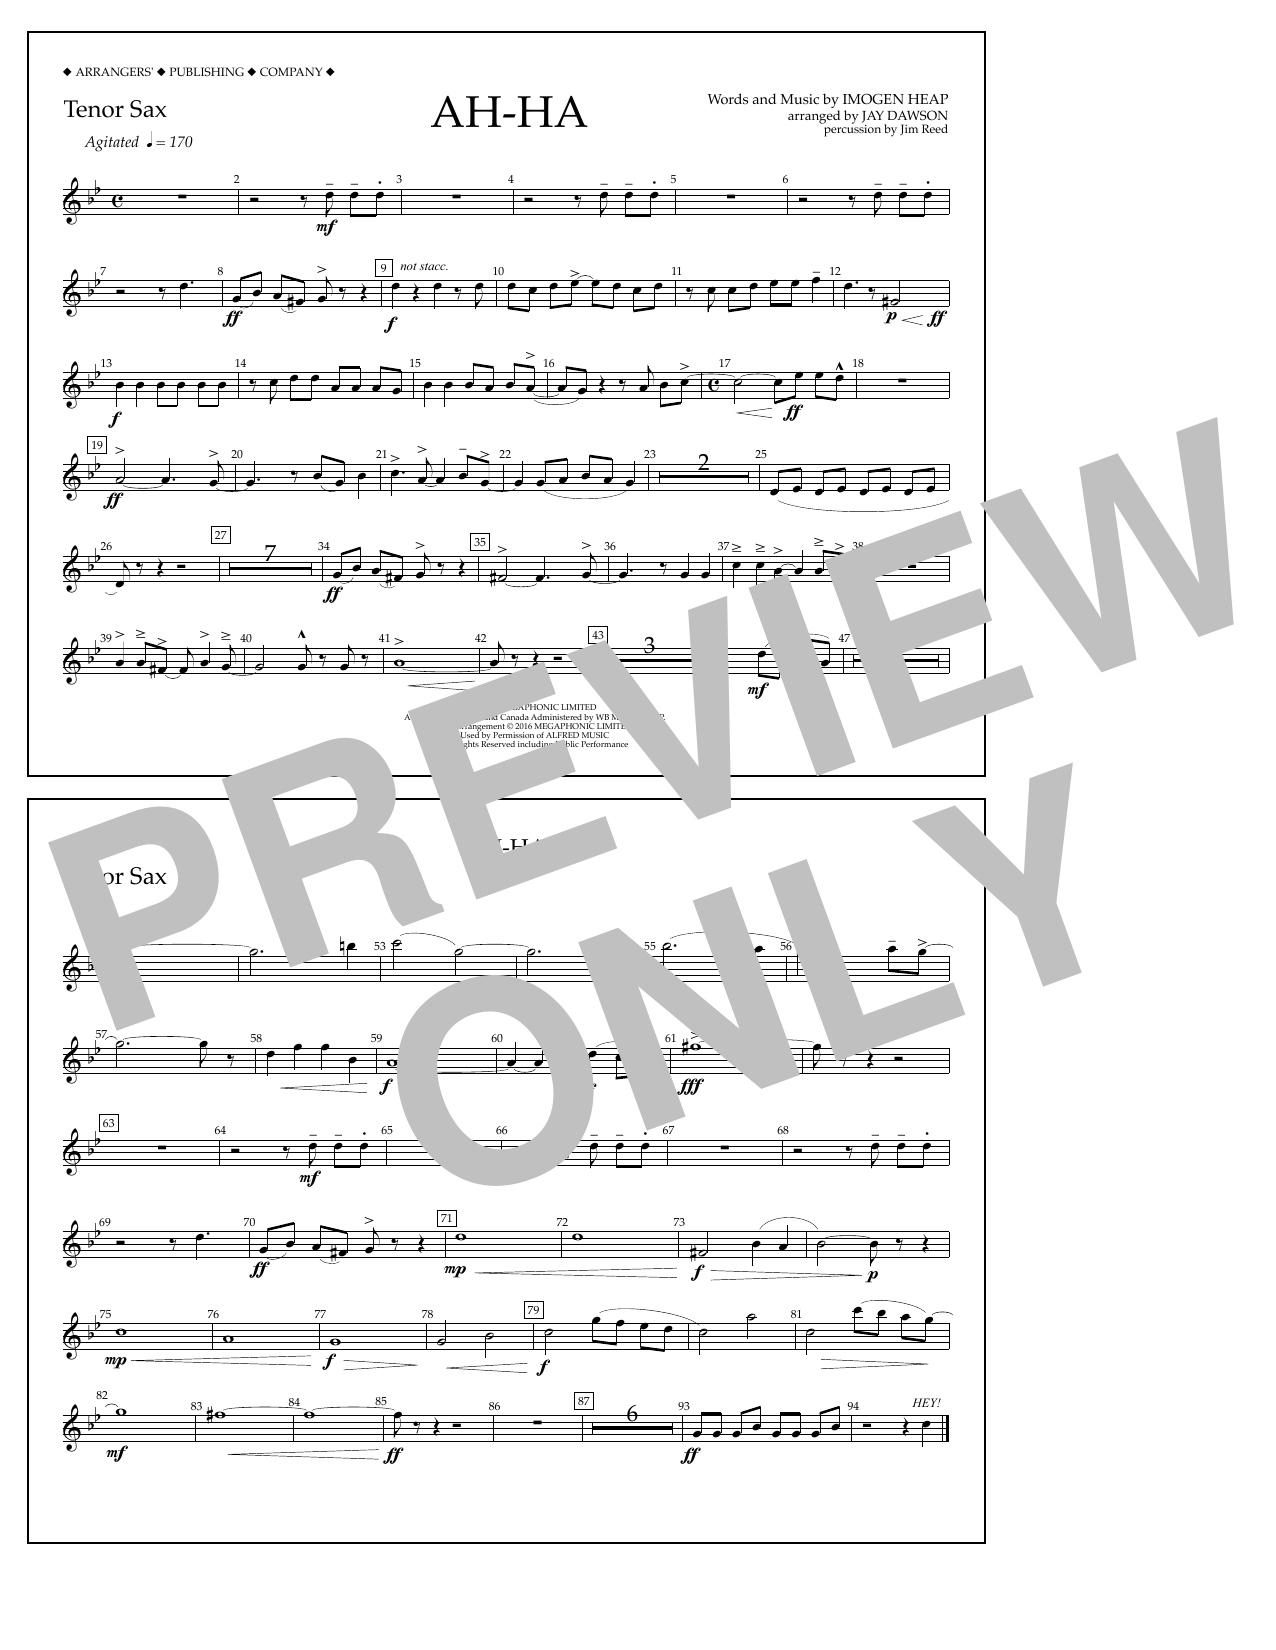 Jay Dawson Ah-ha - Tenor Sax Sheet Music Notes & Chords for Marching Band - Download or Print PDF